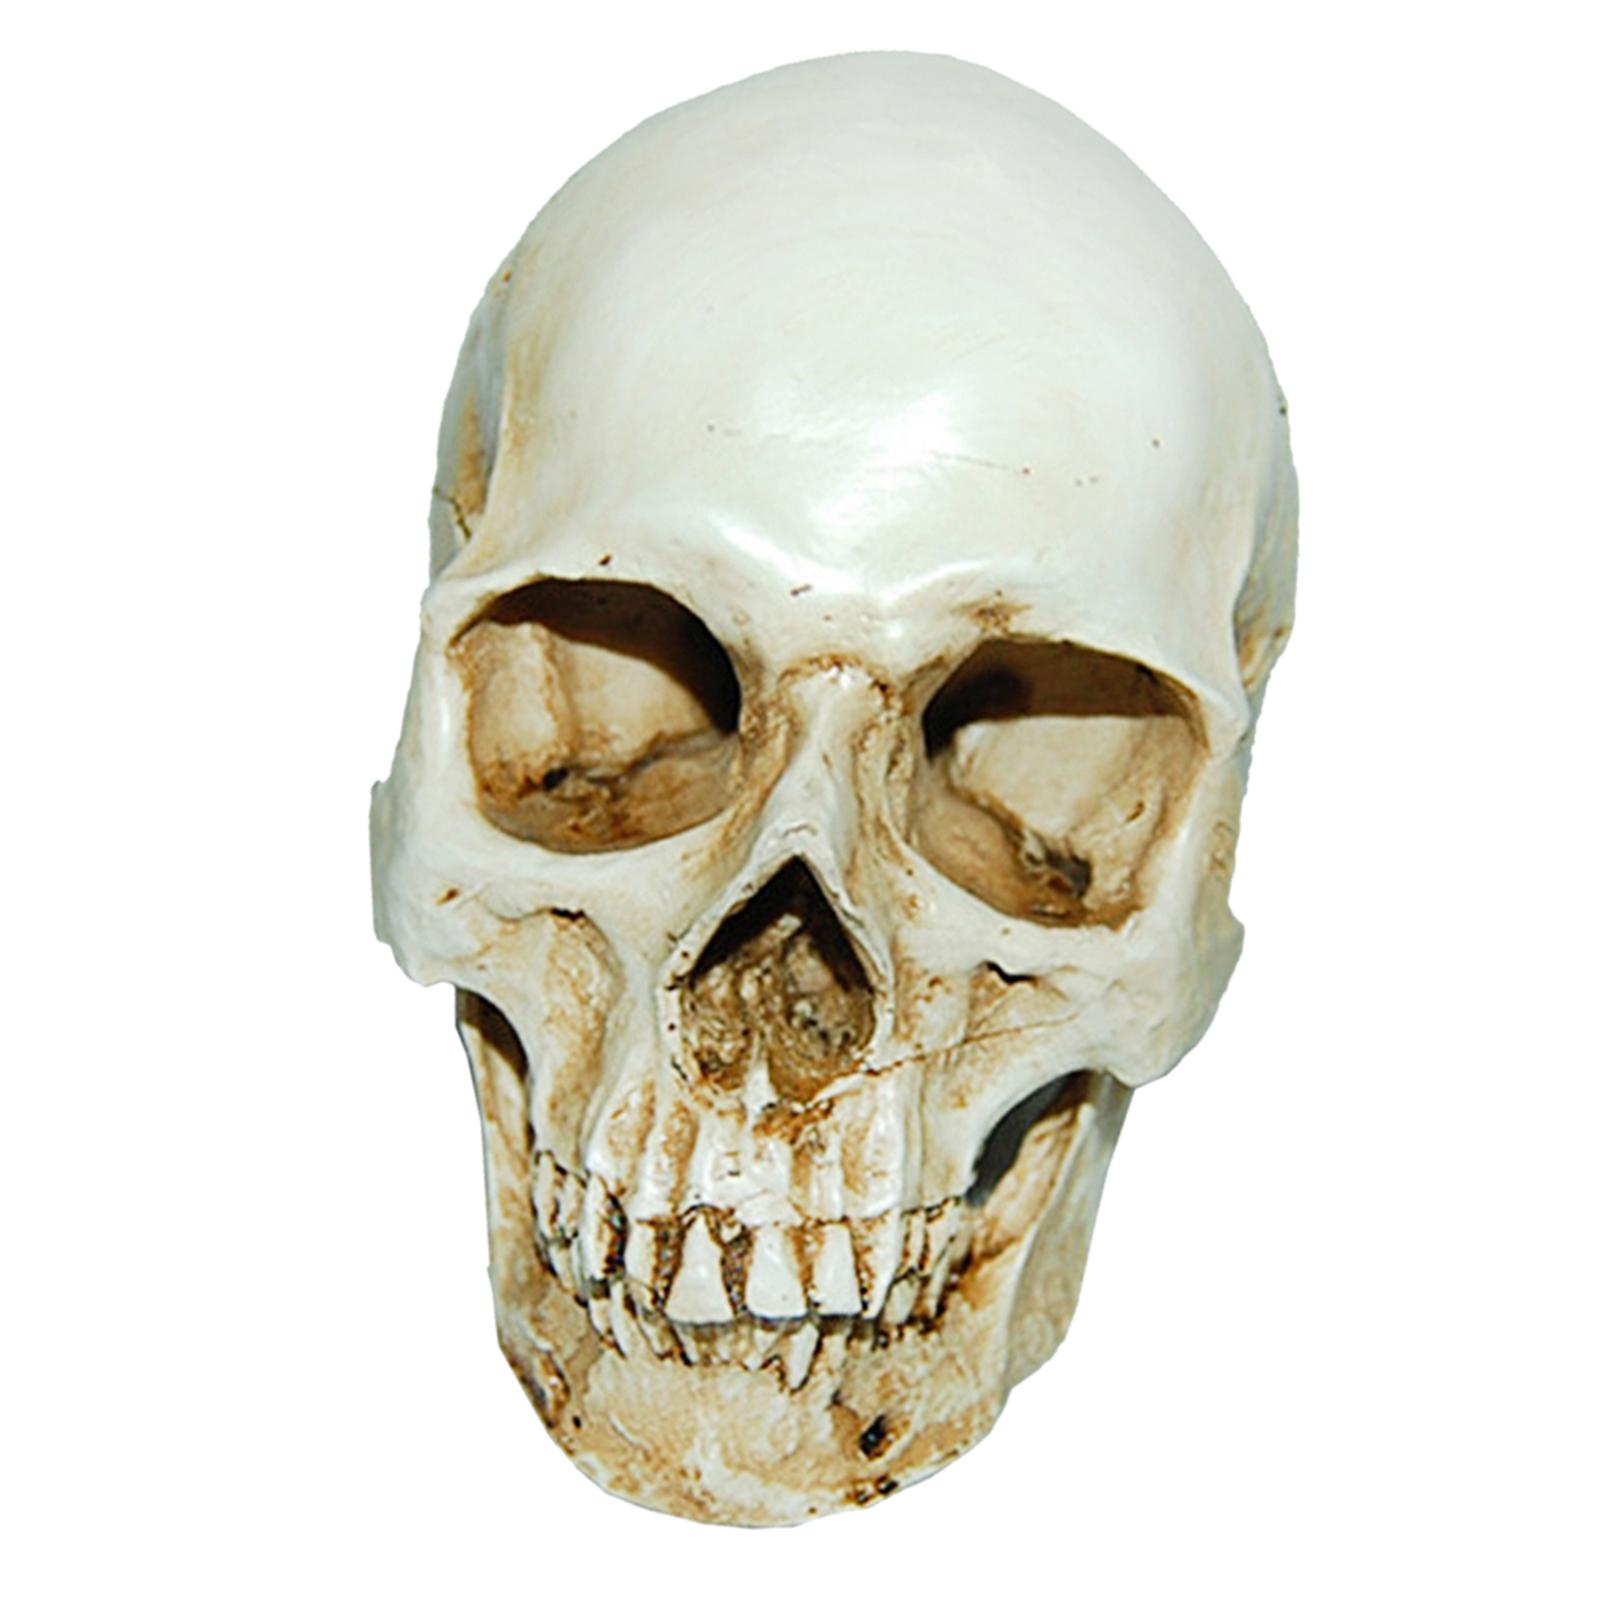 Lifesize 1:1 Human Skull Replica Resin Model Anatomical Medical Skeleton 